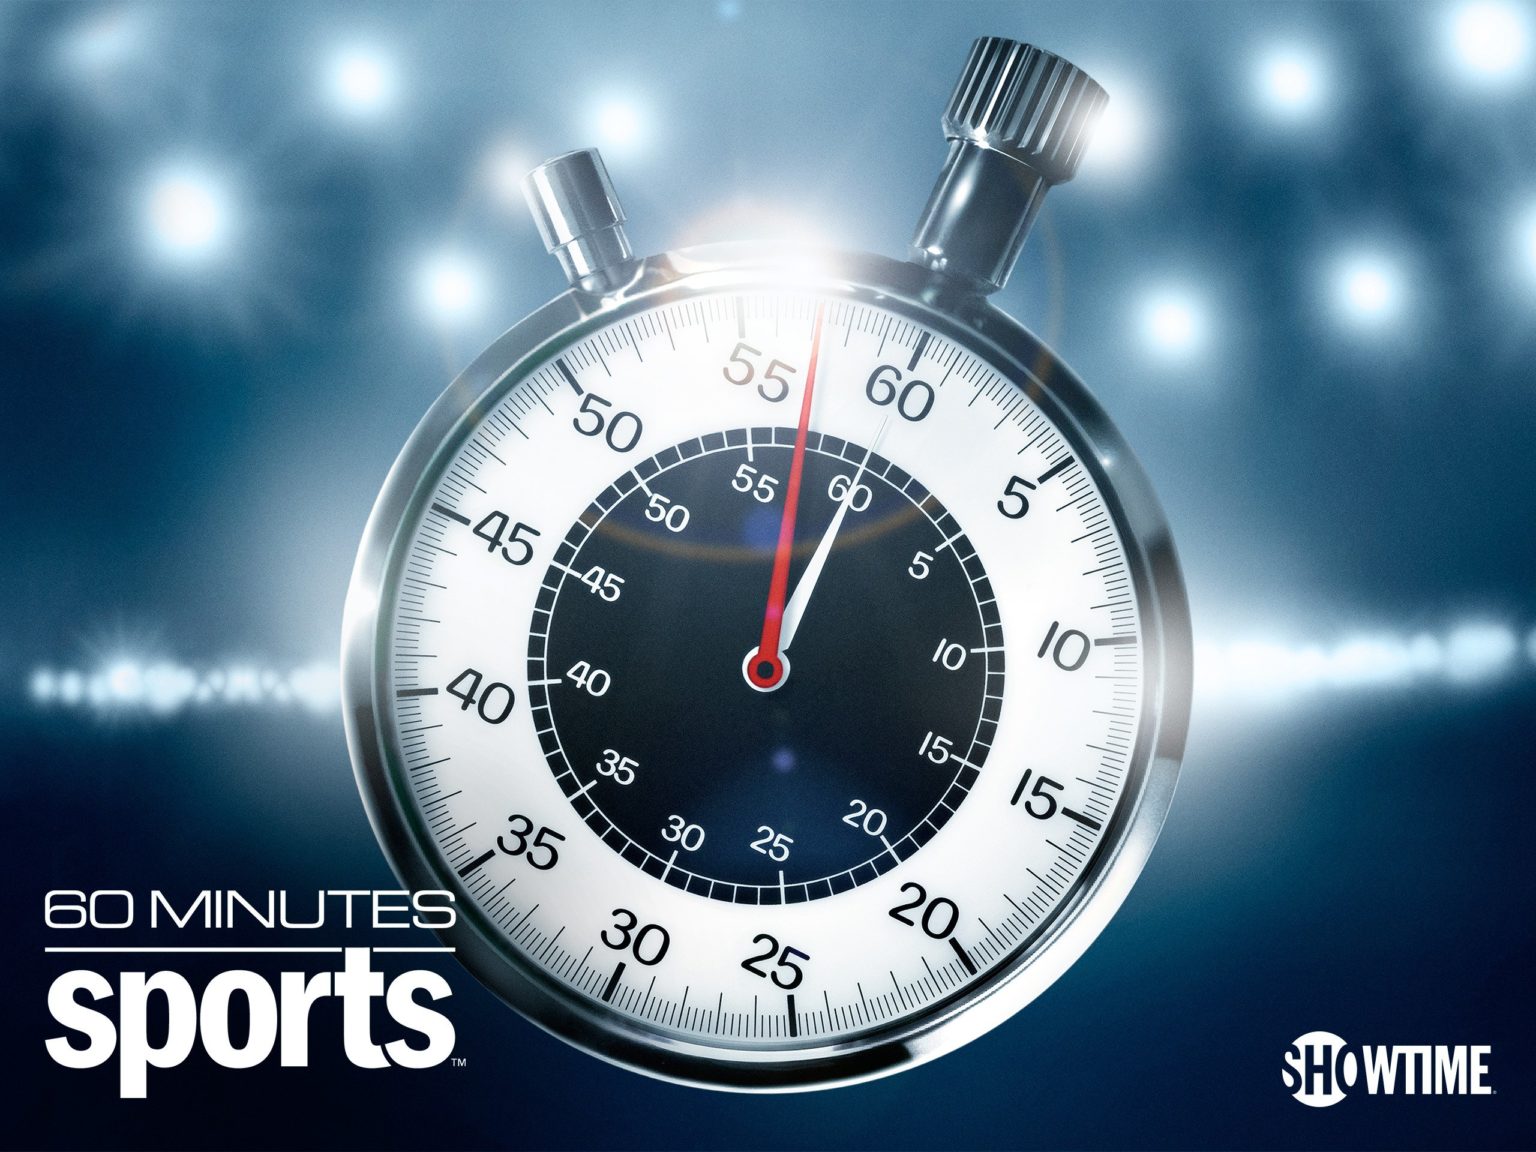 60 Minutes Season 52; CBS News Series Renewed for 201920 Season